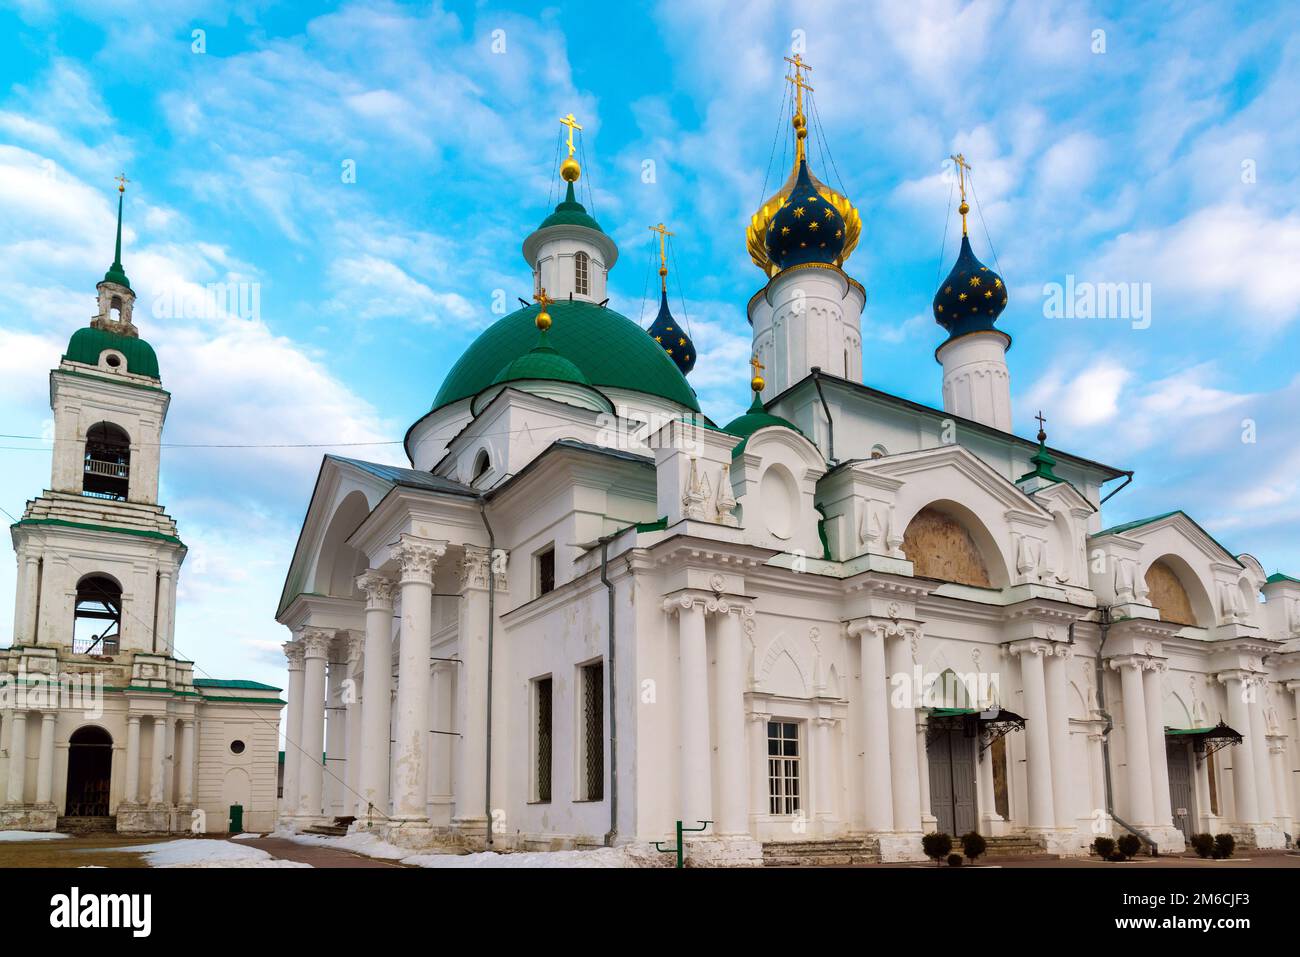 Cathedrals Spaso Yakovlevsky Monastery in a Rostov Veliky, Russia Stock Photo